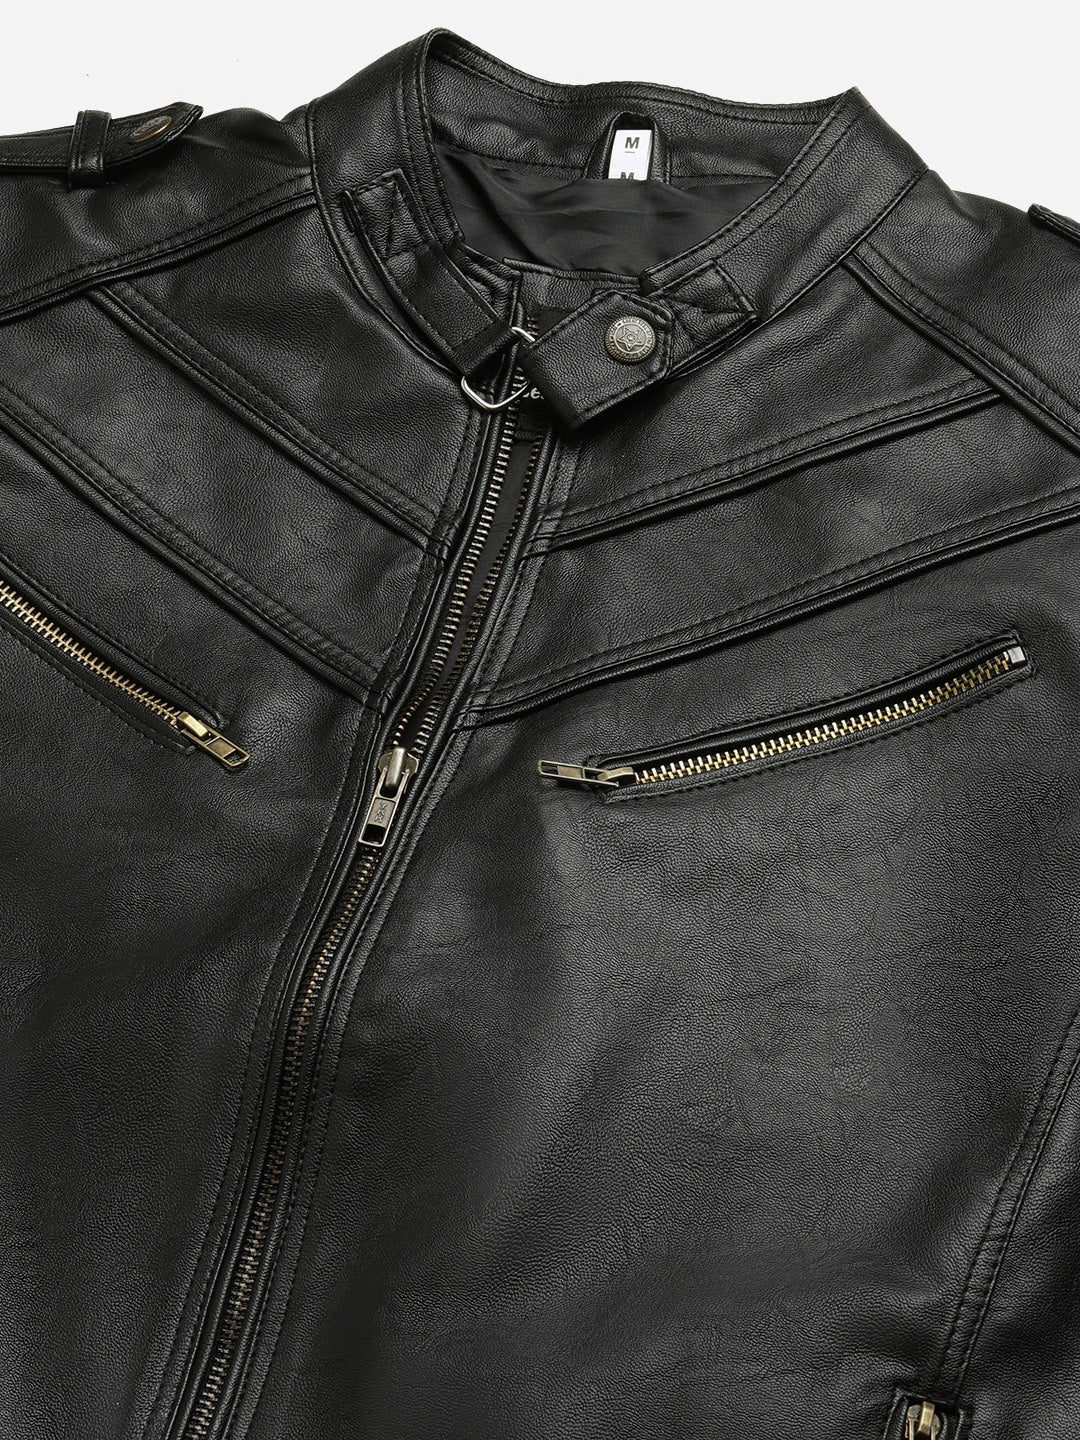 Men Black Solid Leather Jacket Online | QAWACH